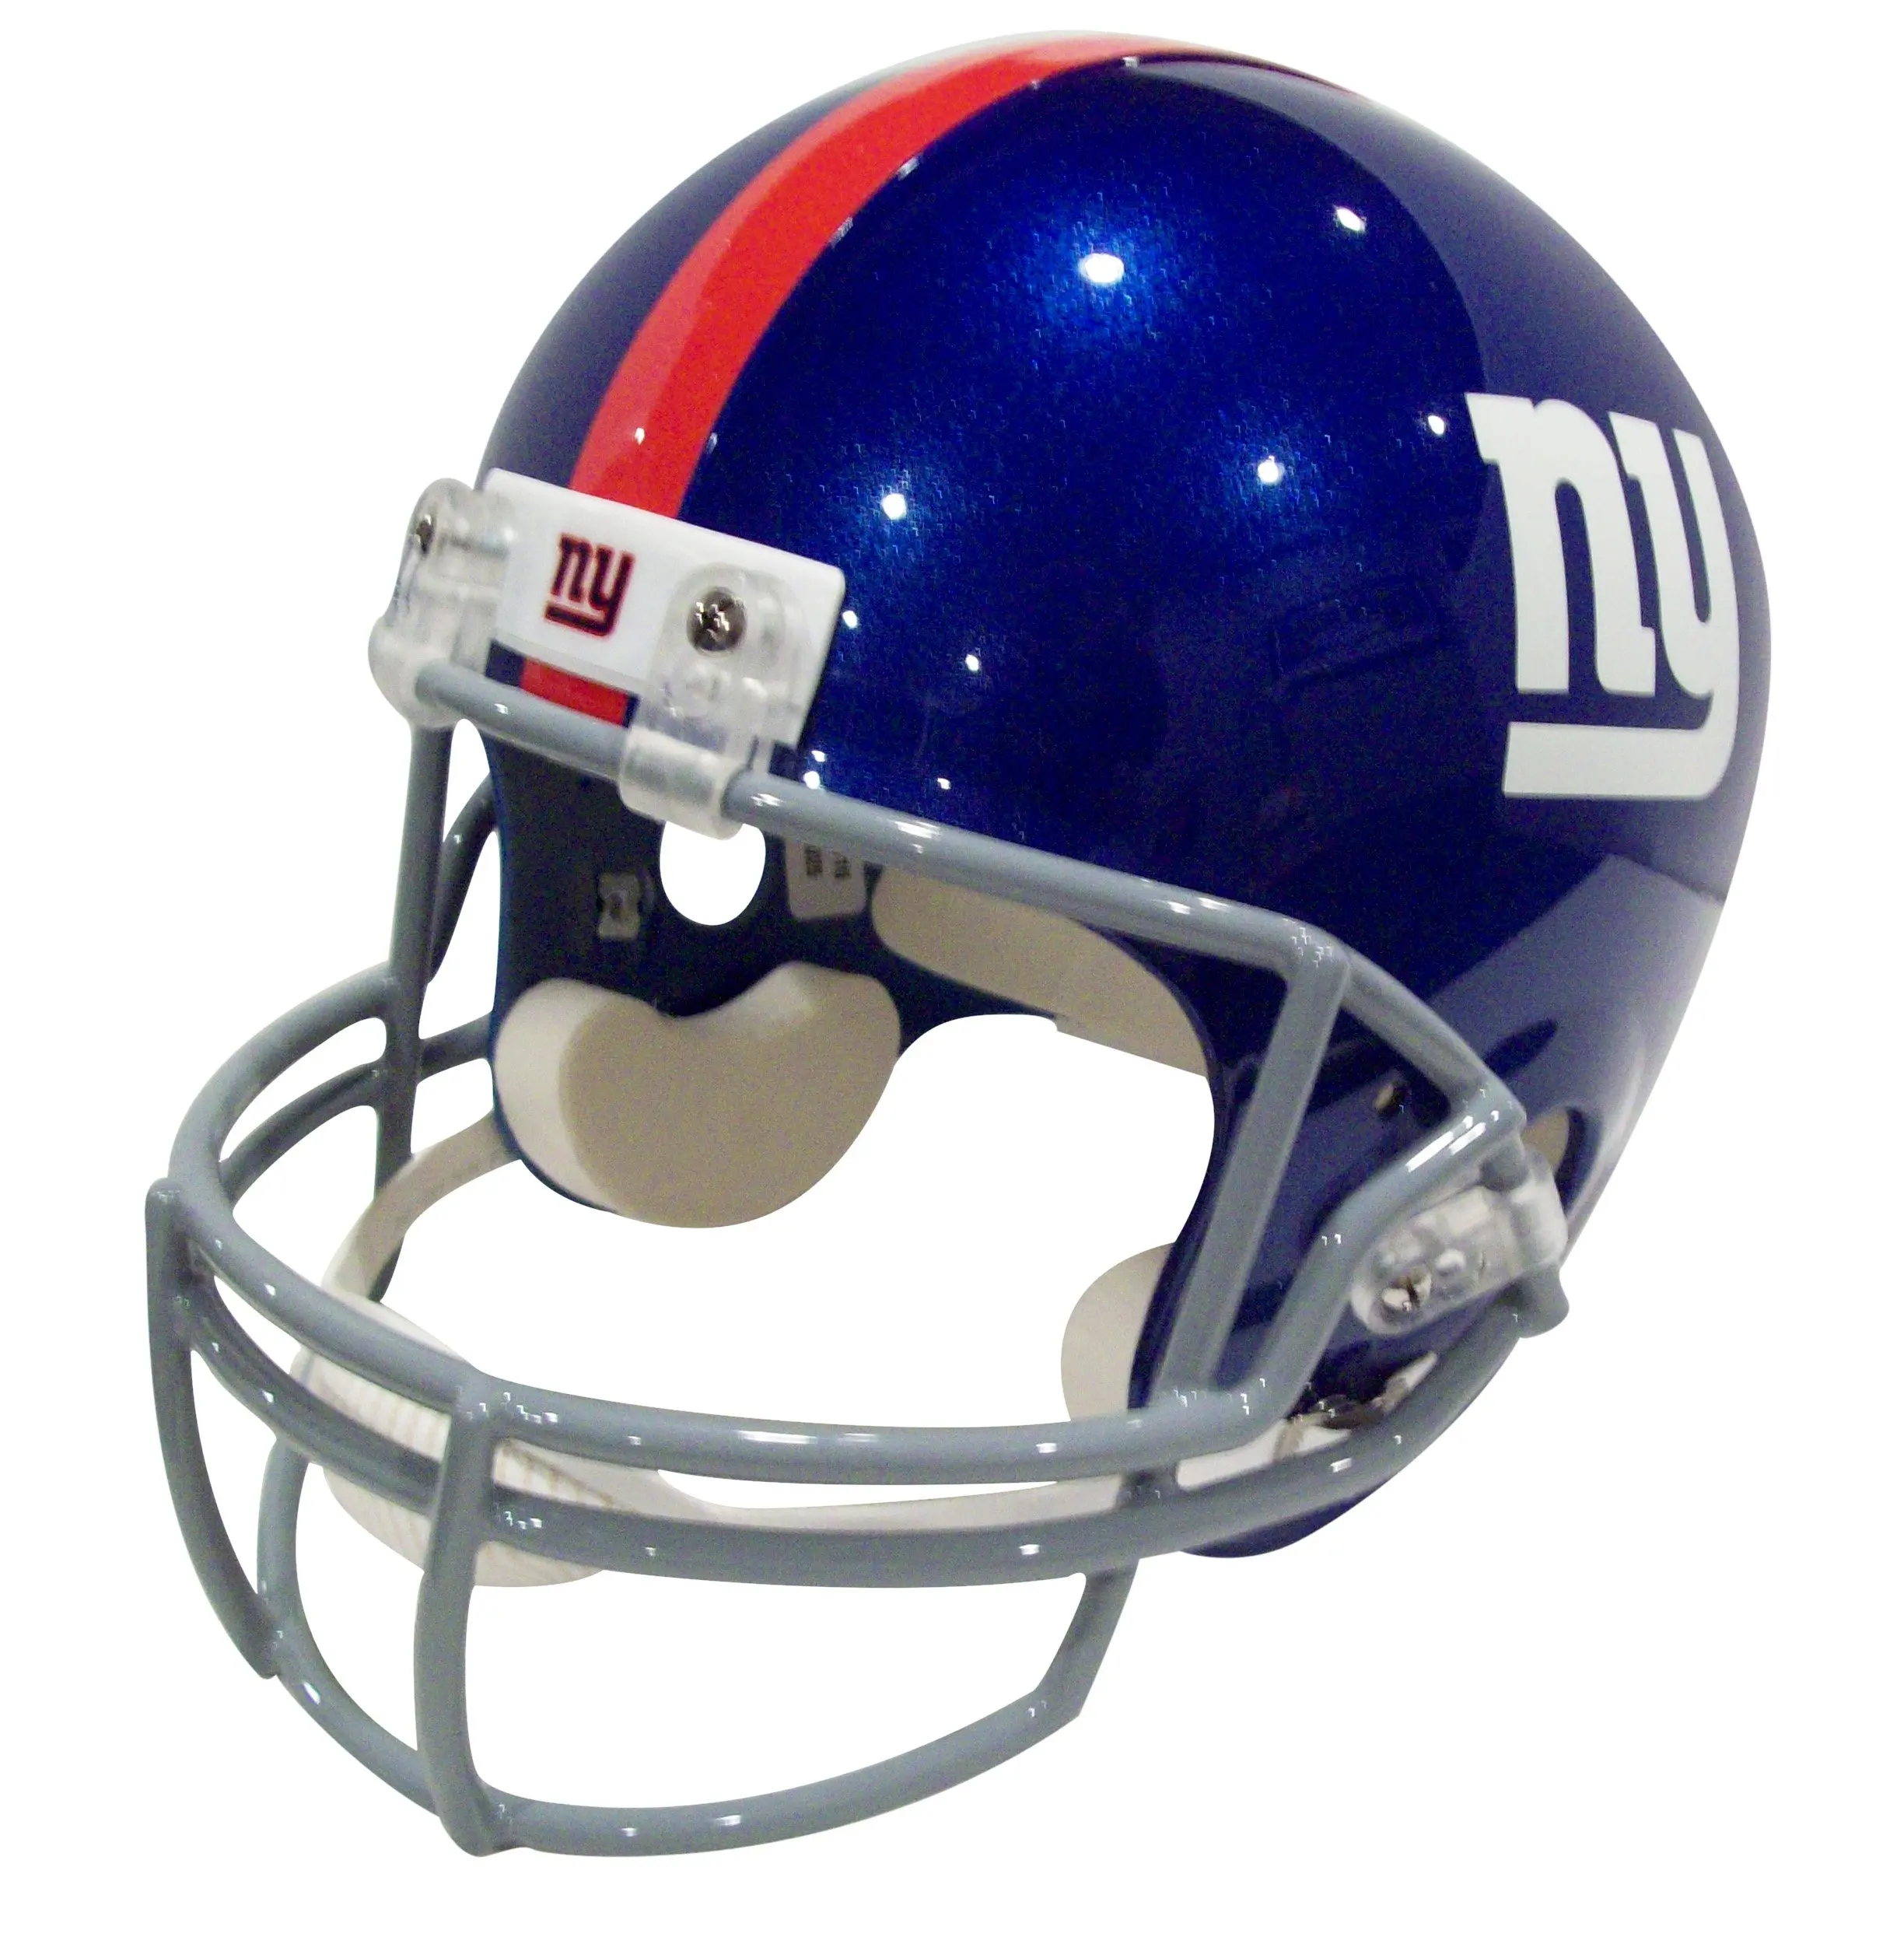 Cheap Giants Football Helmet, find Giants Football Helmet deals on line